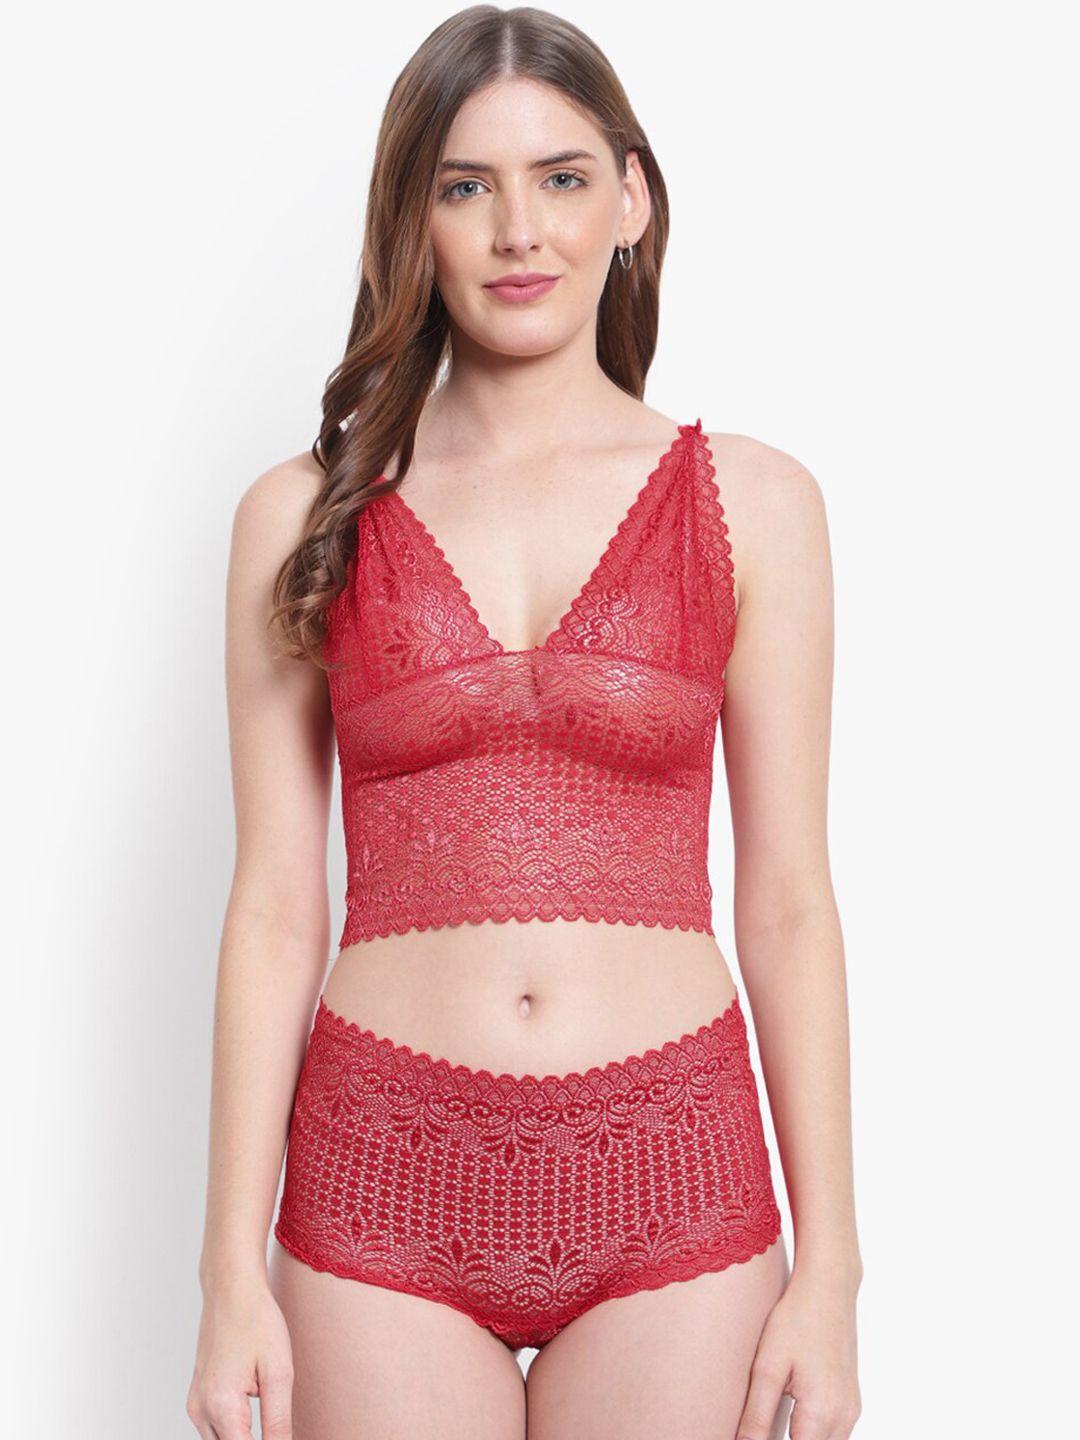 bruchi club women red self-designed lace lingerie set